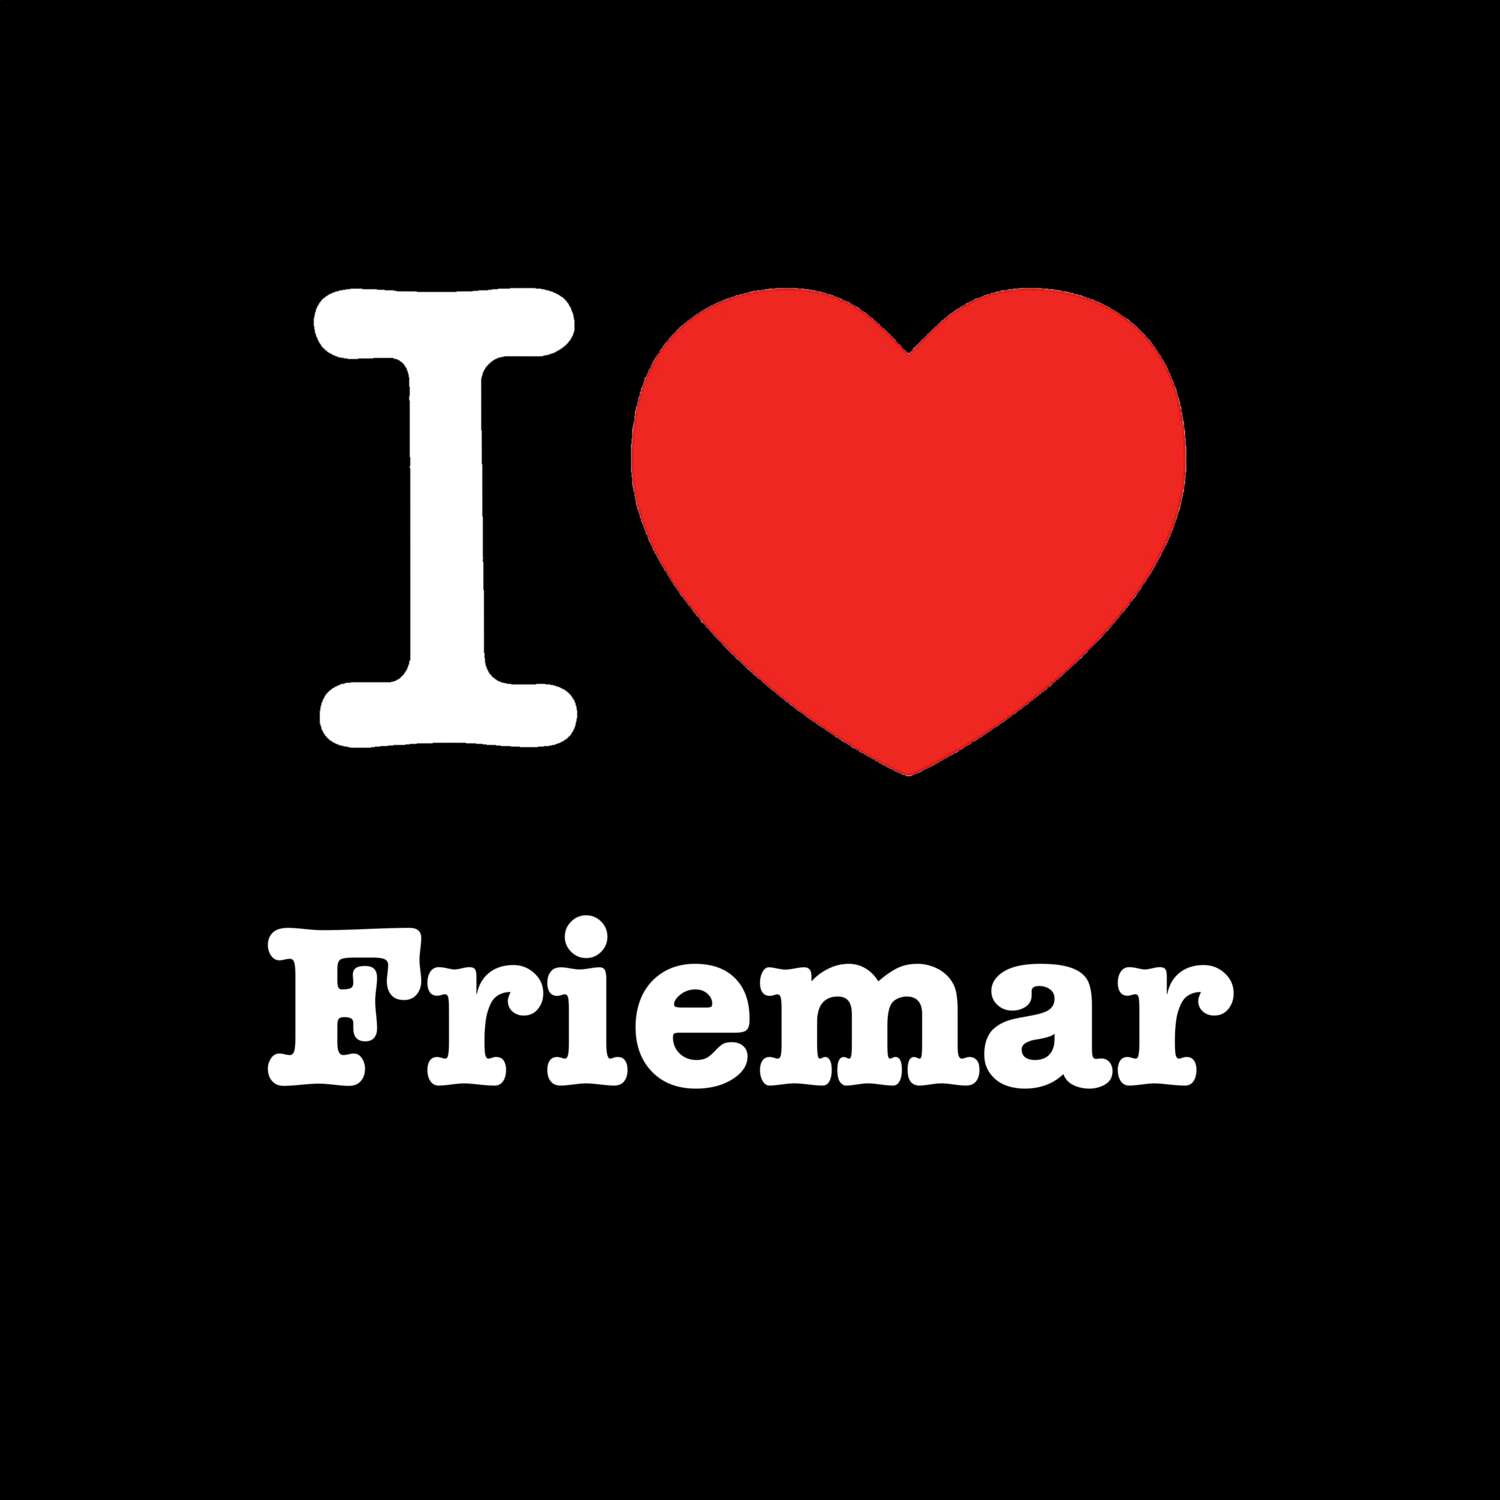 Friemar T-Shirt »I love«